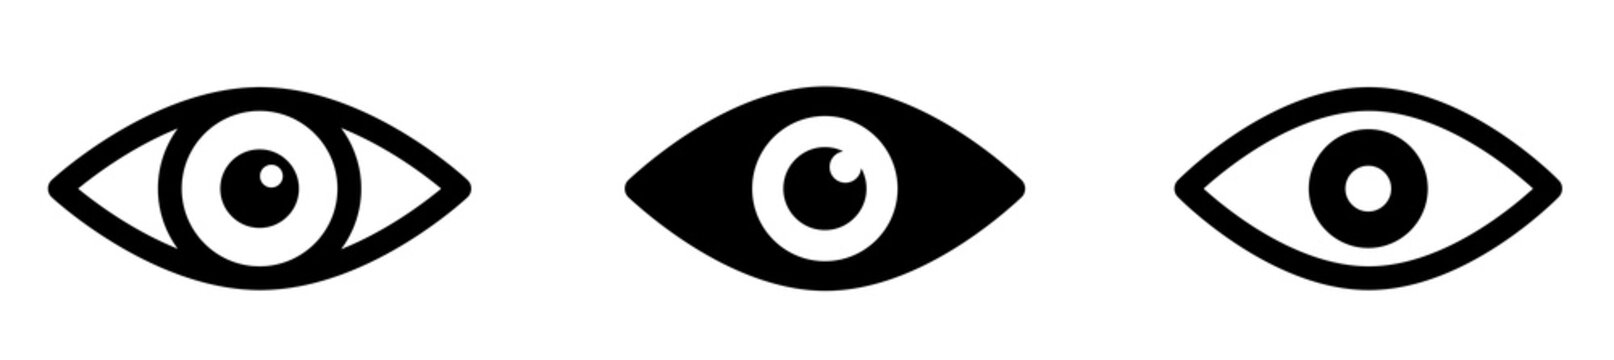 Eye icon set. Eyesight symbol. Retina scan eye icons. Simple eyes collection. Eye silhouette - stock vector.